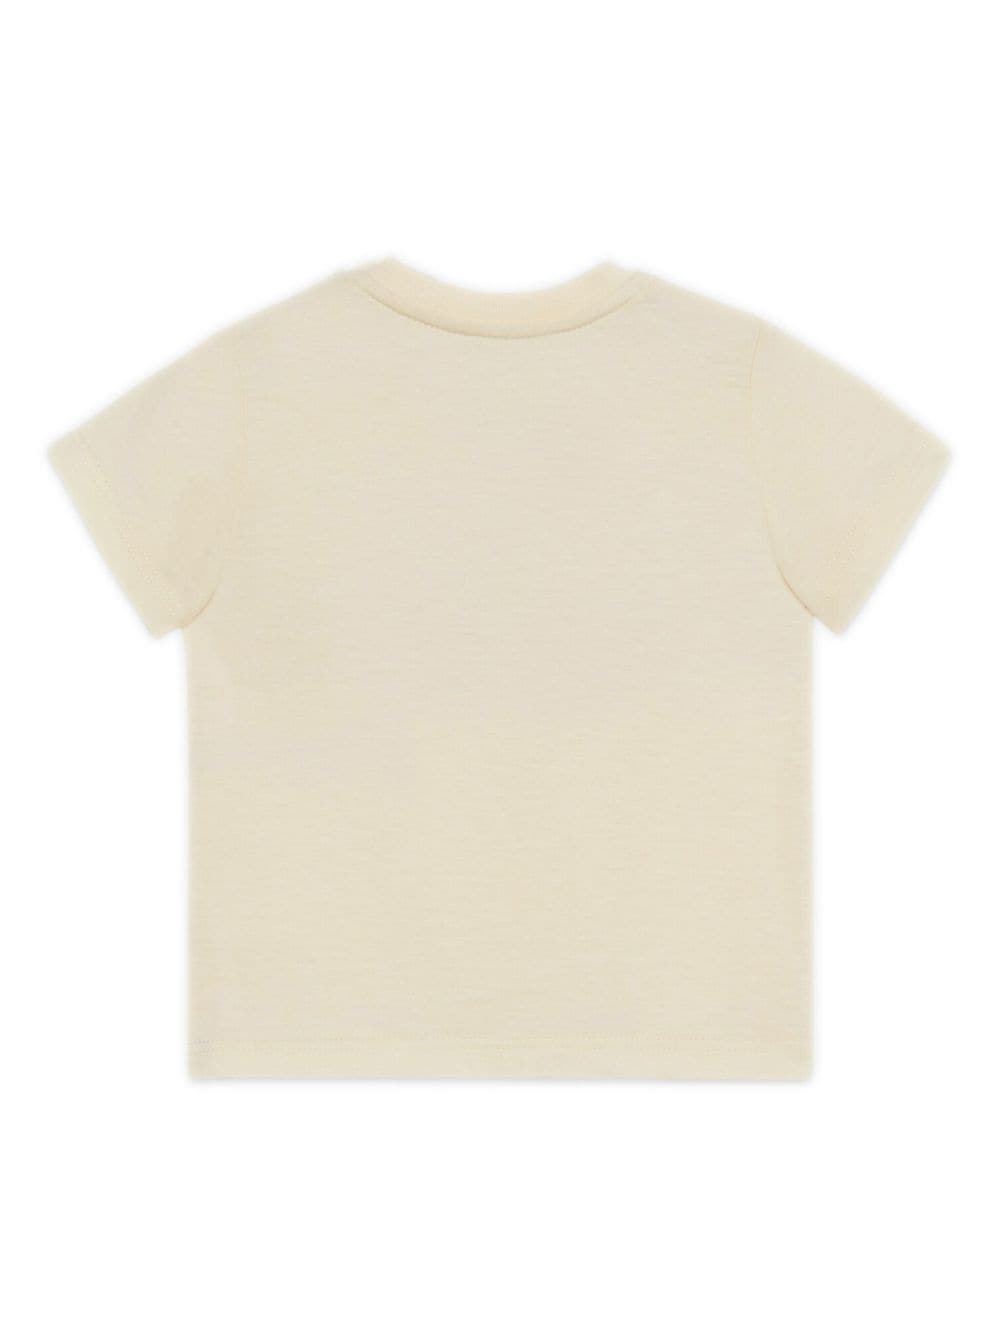 Cream cotton jersey baby girl GUCCI t-shirt